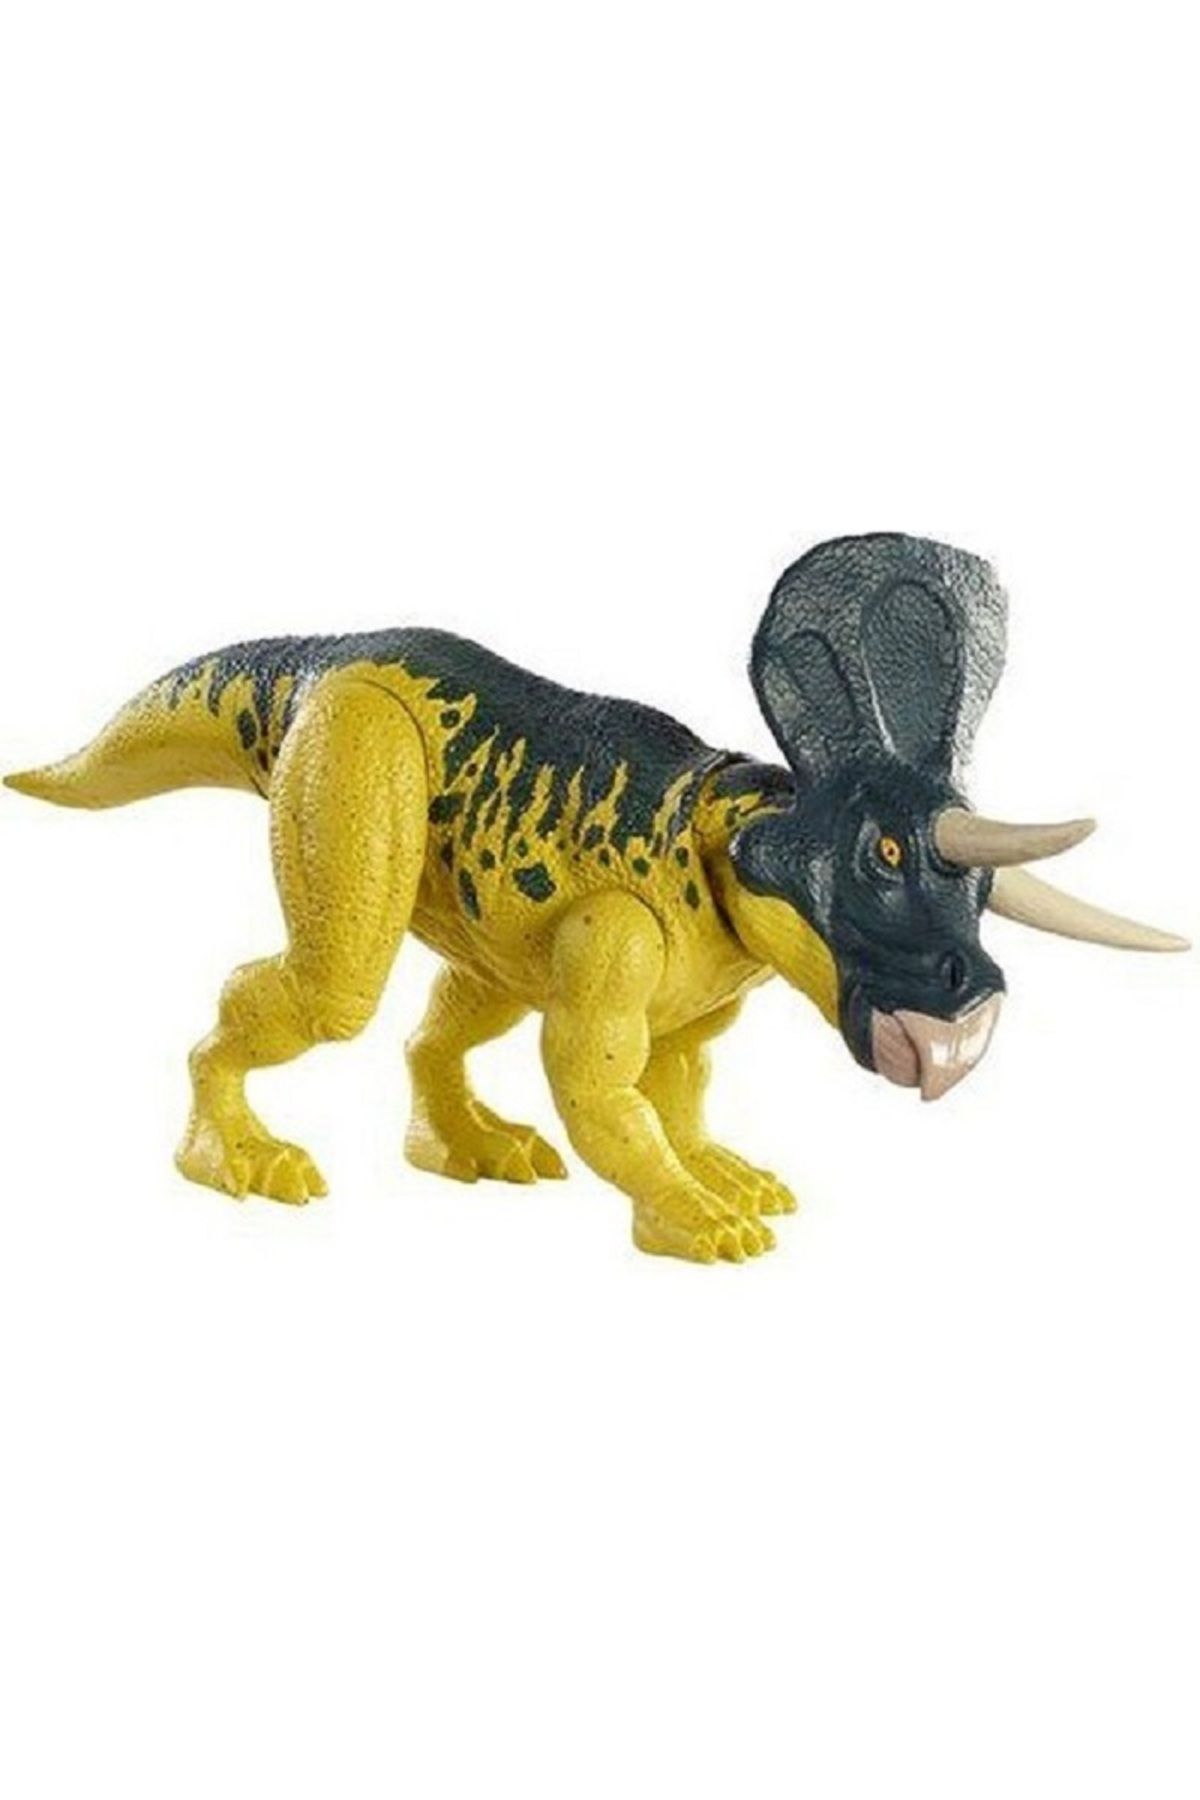 Mattel Jurassic World Dinosaur Zuniceratops Action Figure